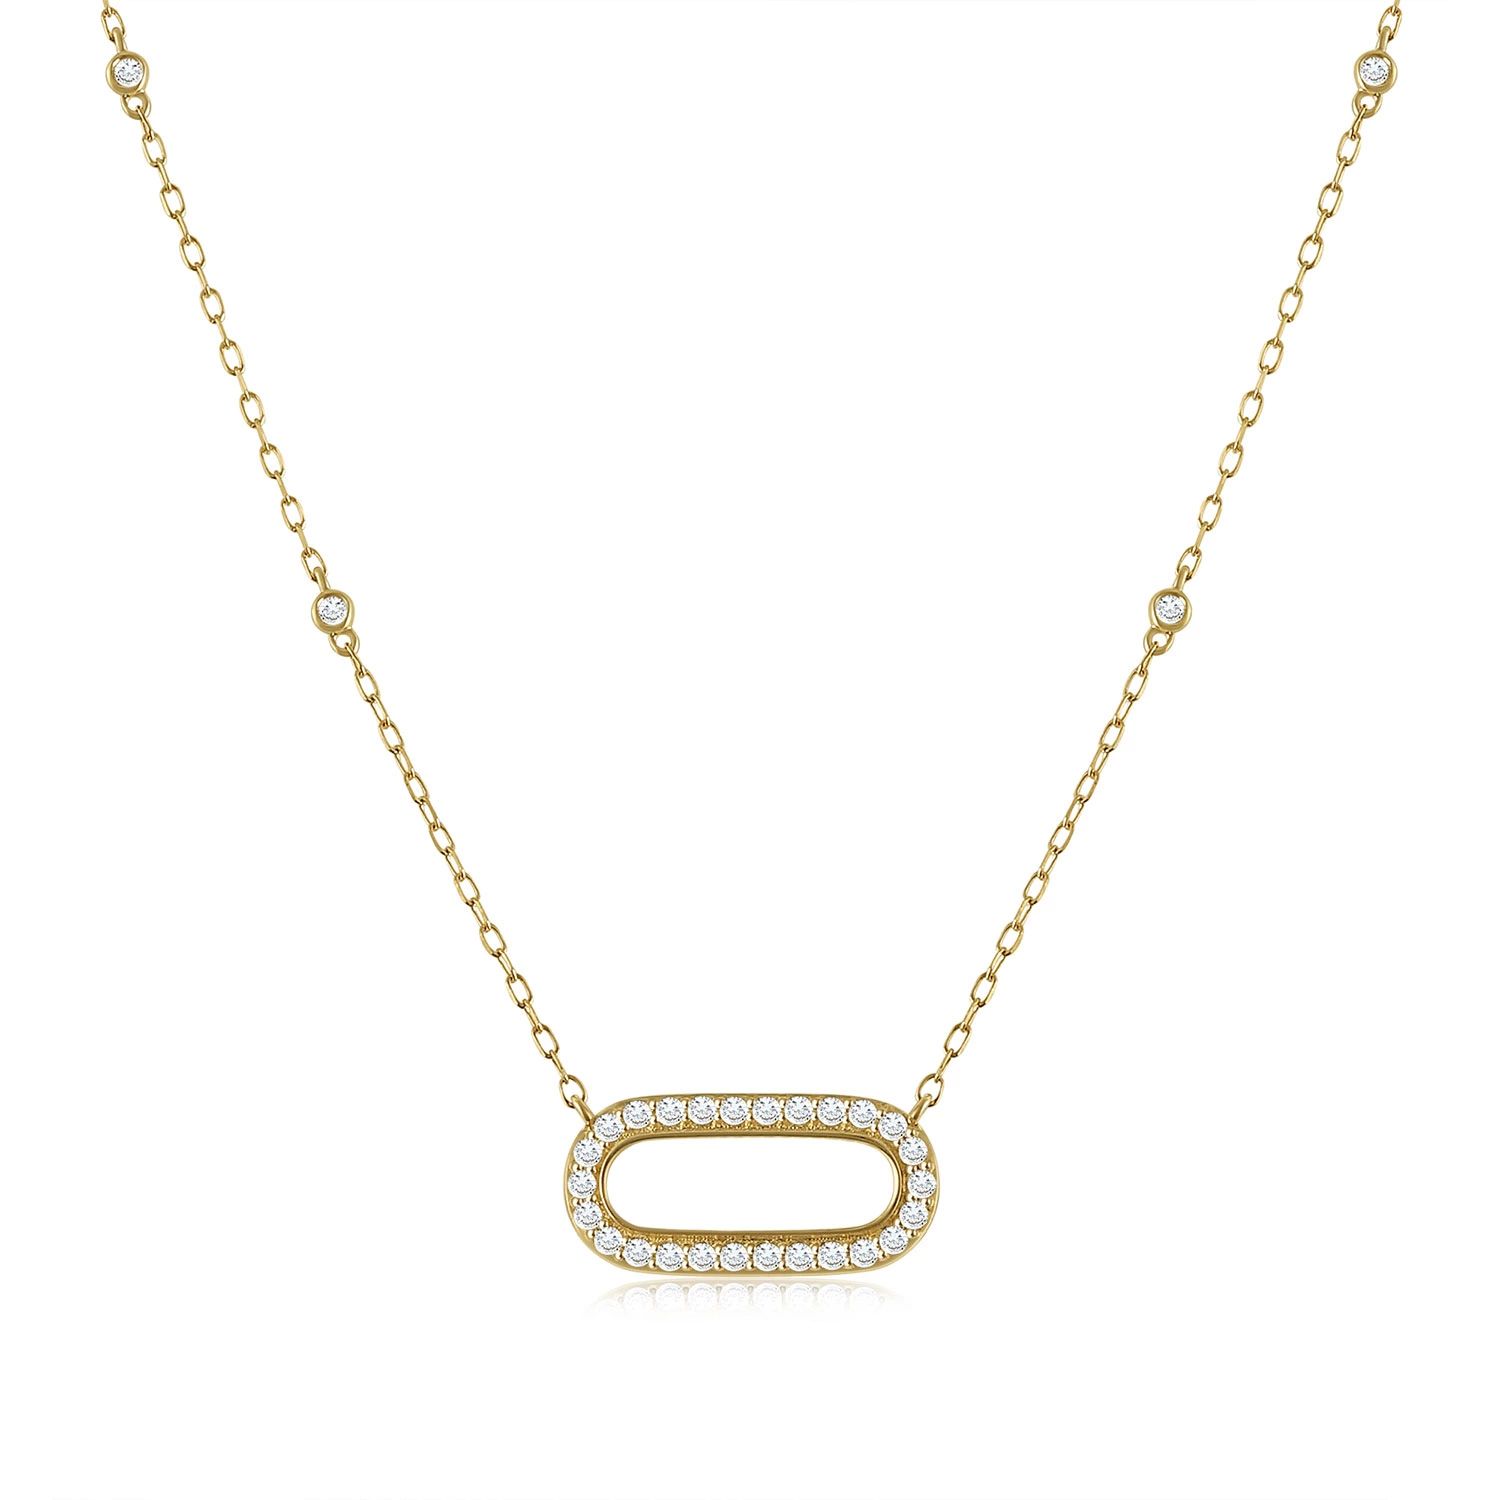 0.23 CT T.W. Diamond Fashion Necklace in 14K Yellow Gold | Sam's Club